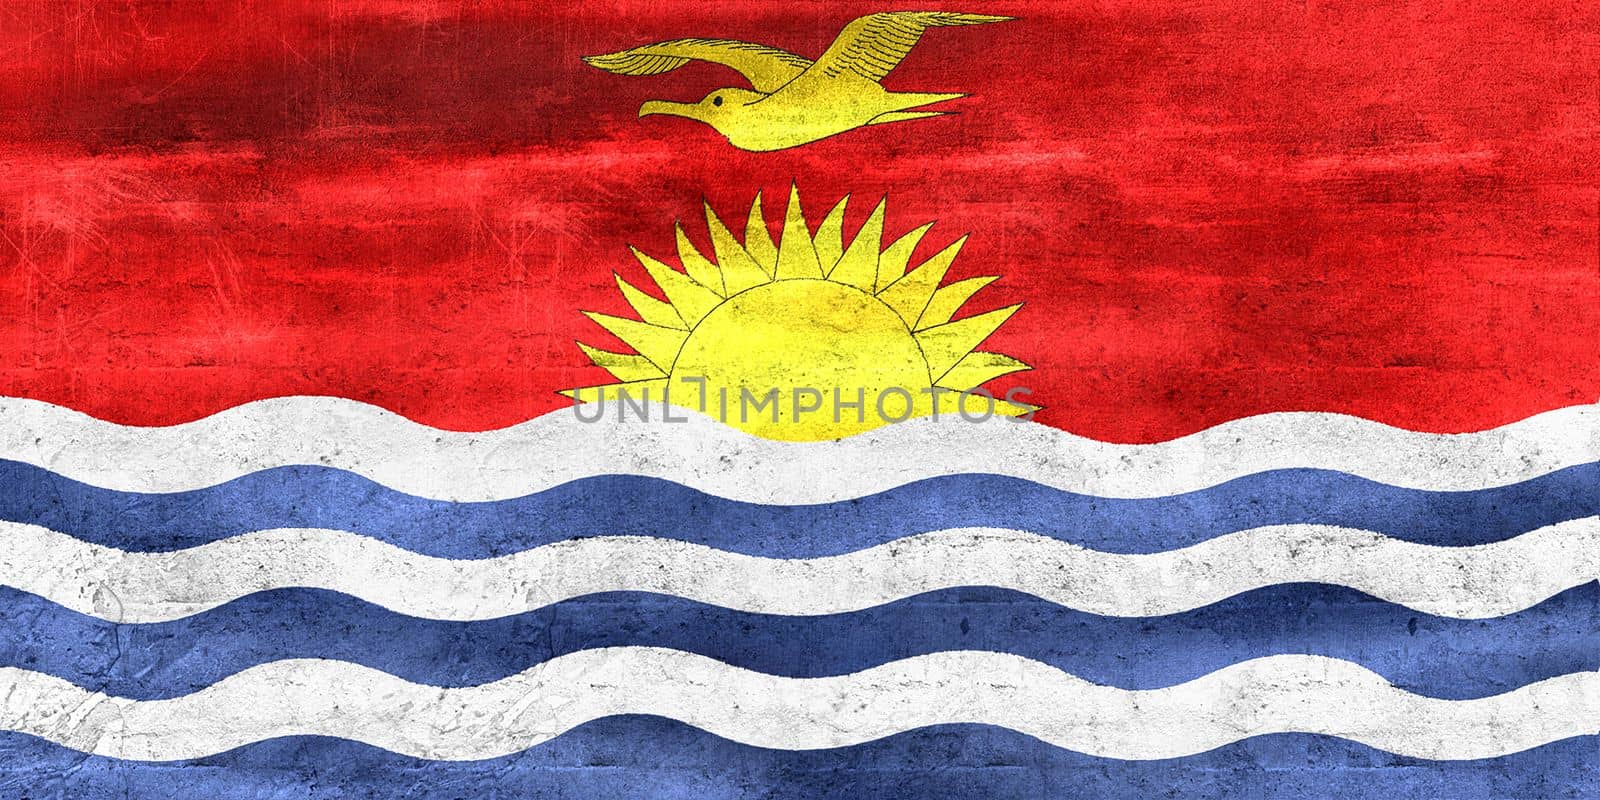 3D-Illustration of a Kiribati flag - realistic waving fabric flag by MP_foto71